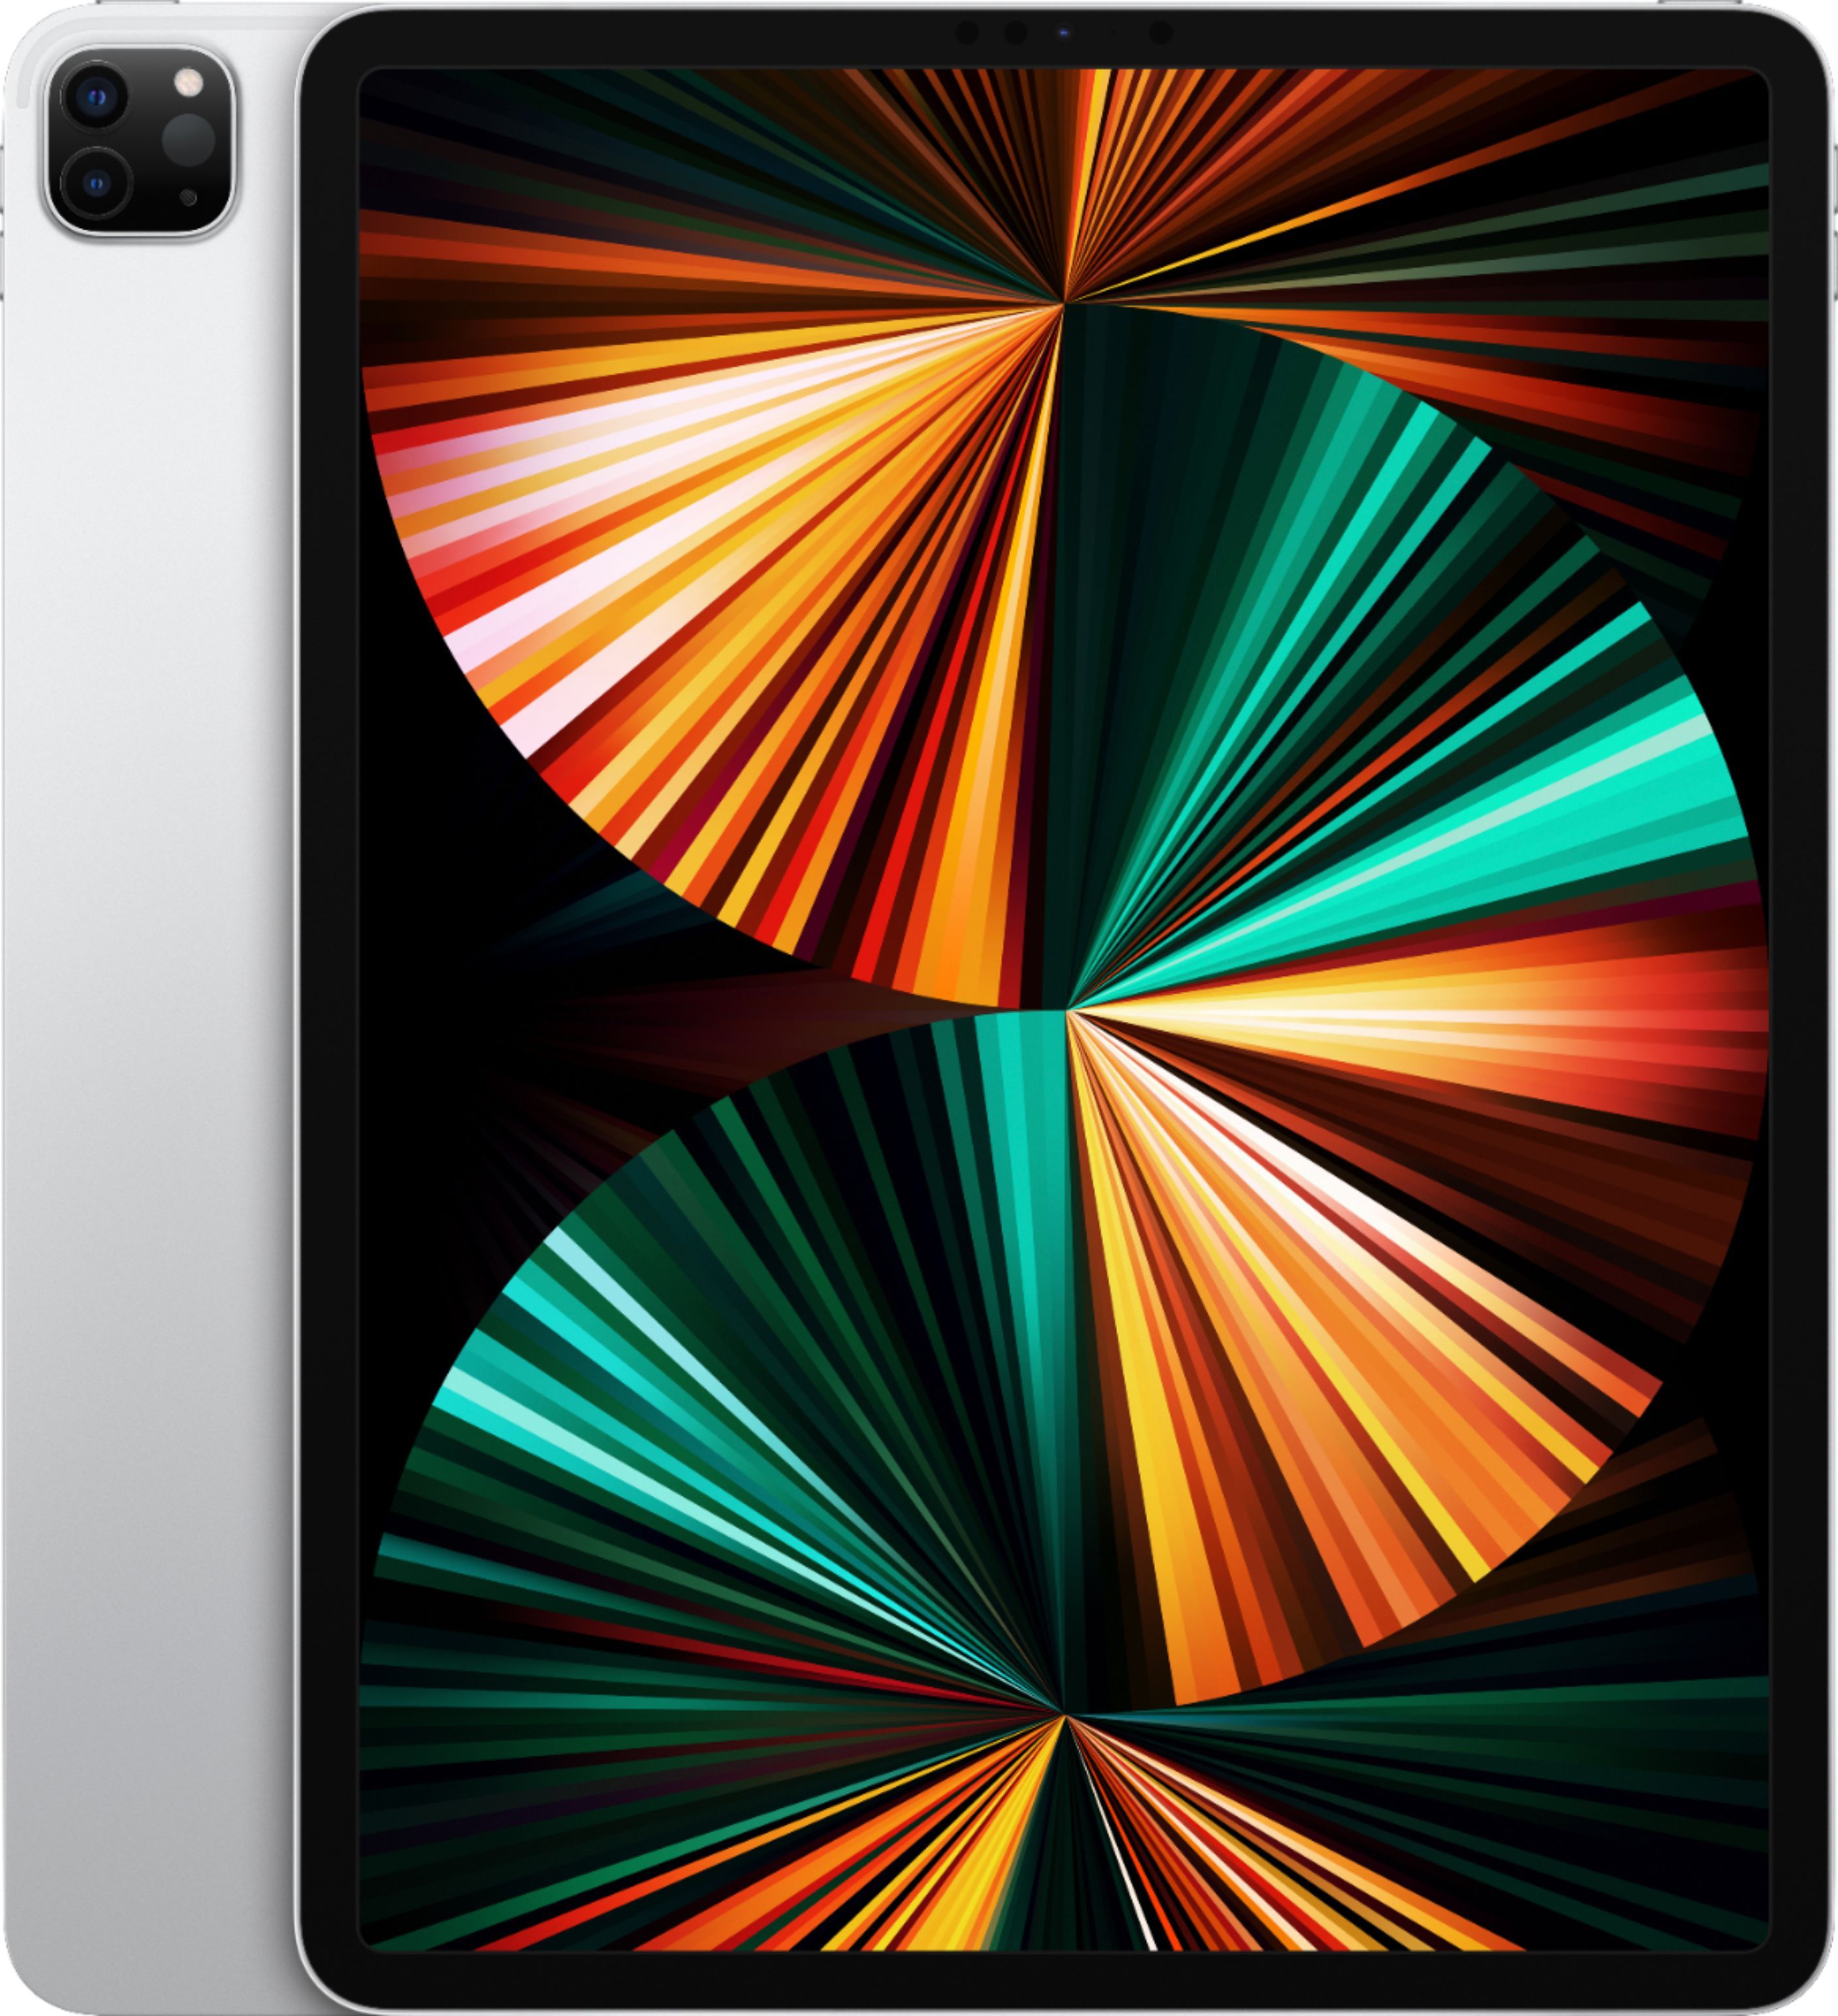 Apple 12.9-Inch iPad Pro with Wi-Fi 128GB Silver MHNG3LL/A - Best Buy | Best Buy U.S.